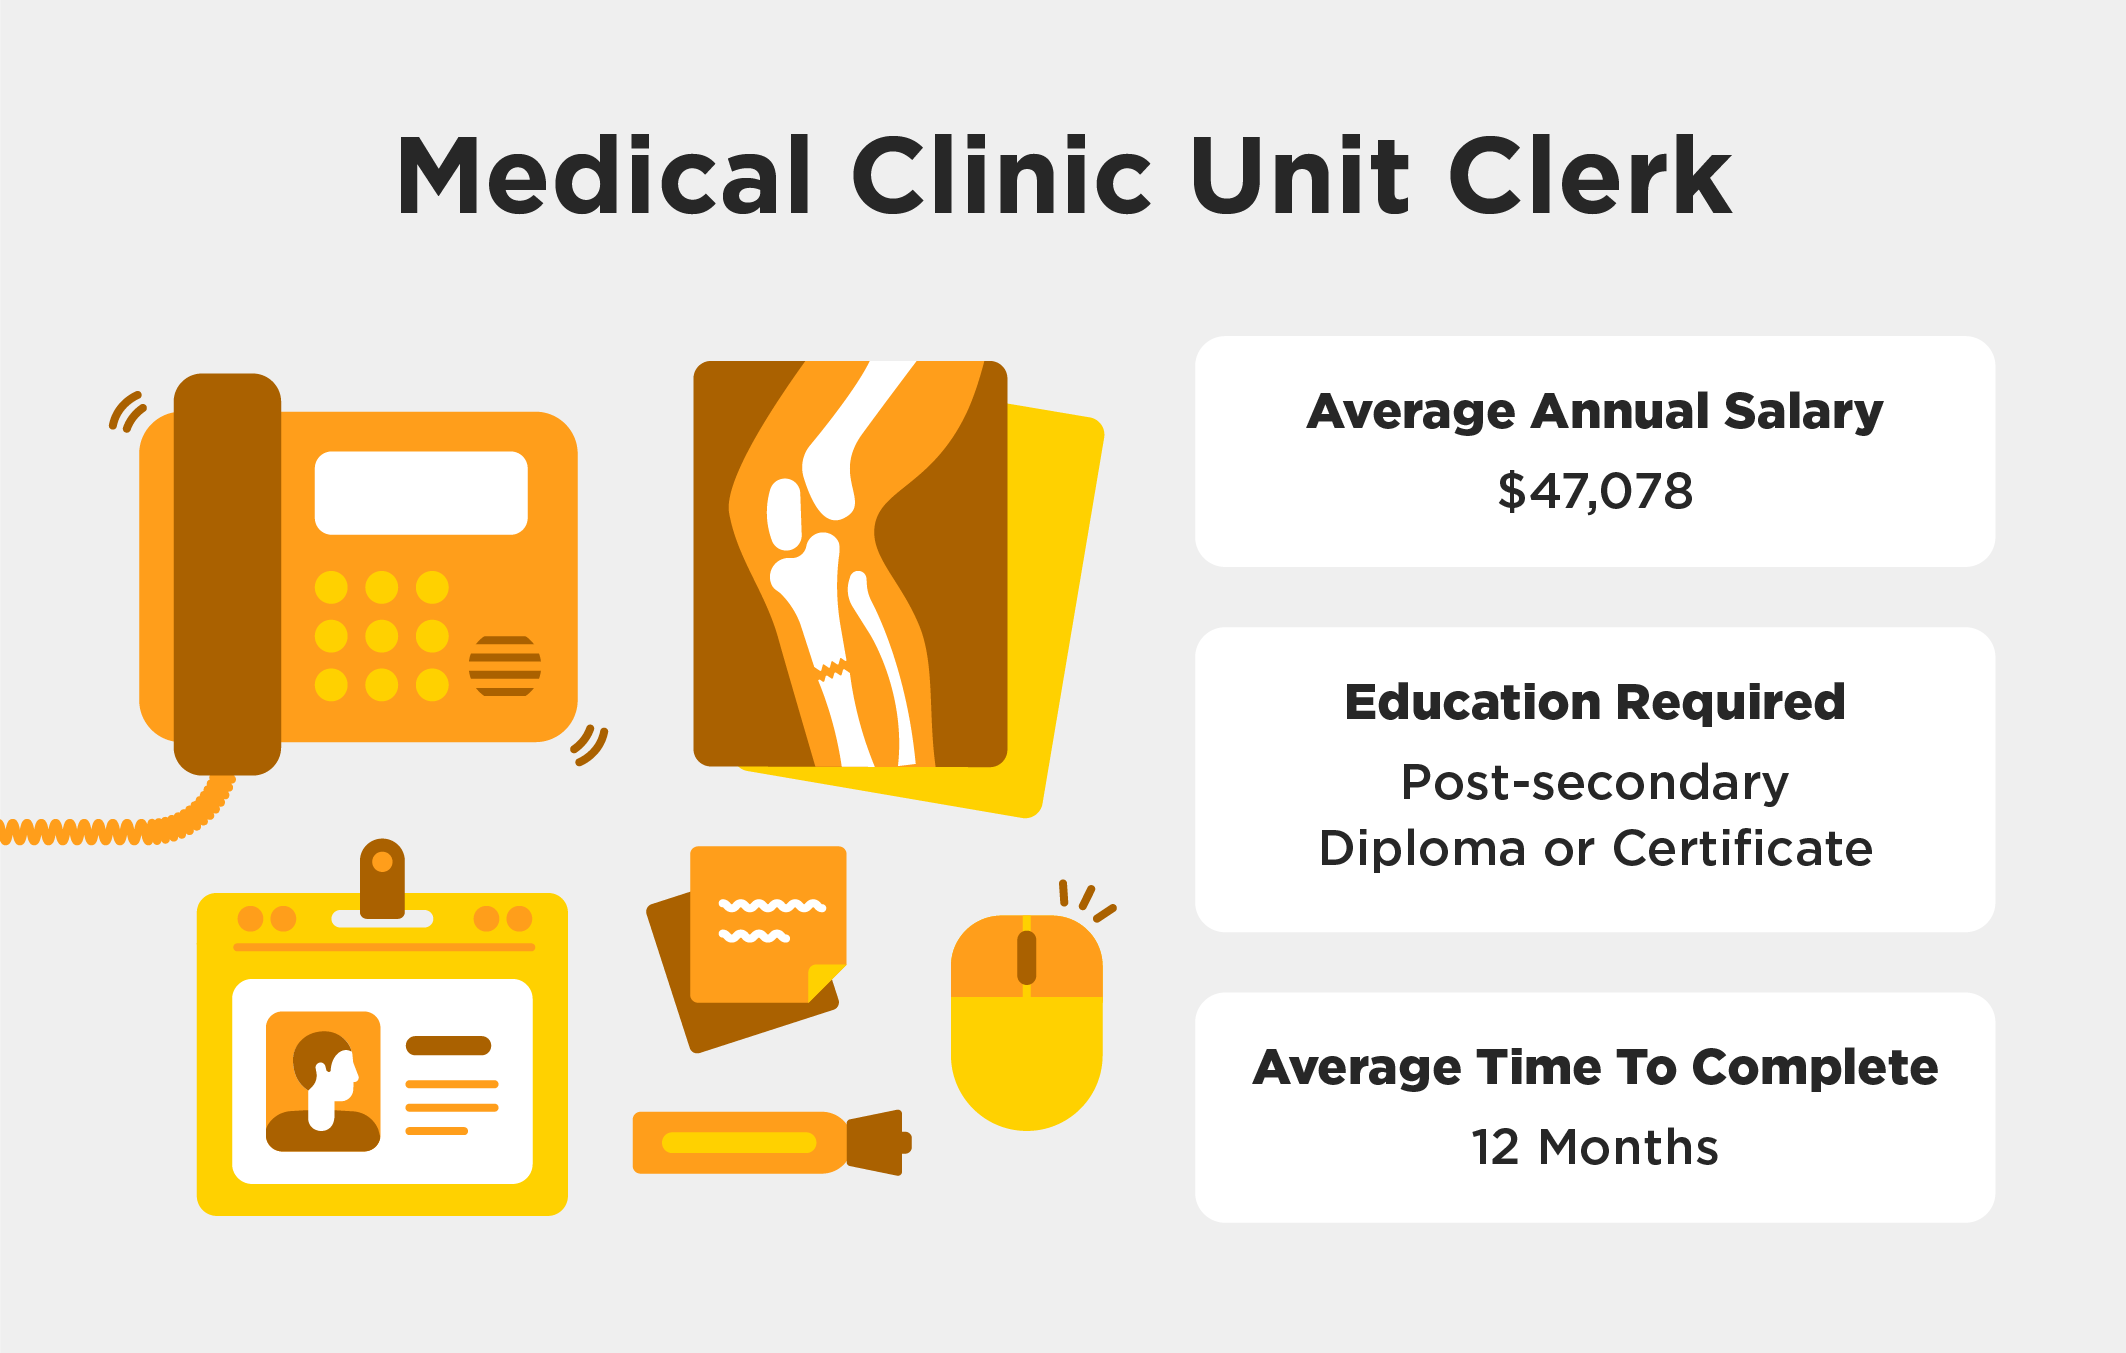 Illustration describing the medical clinic clerk role